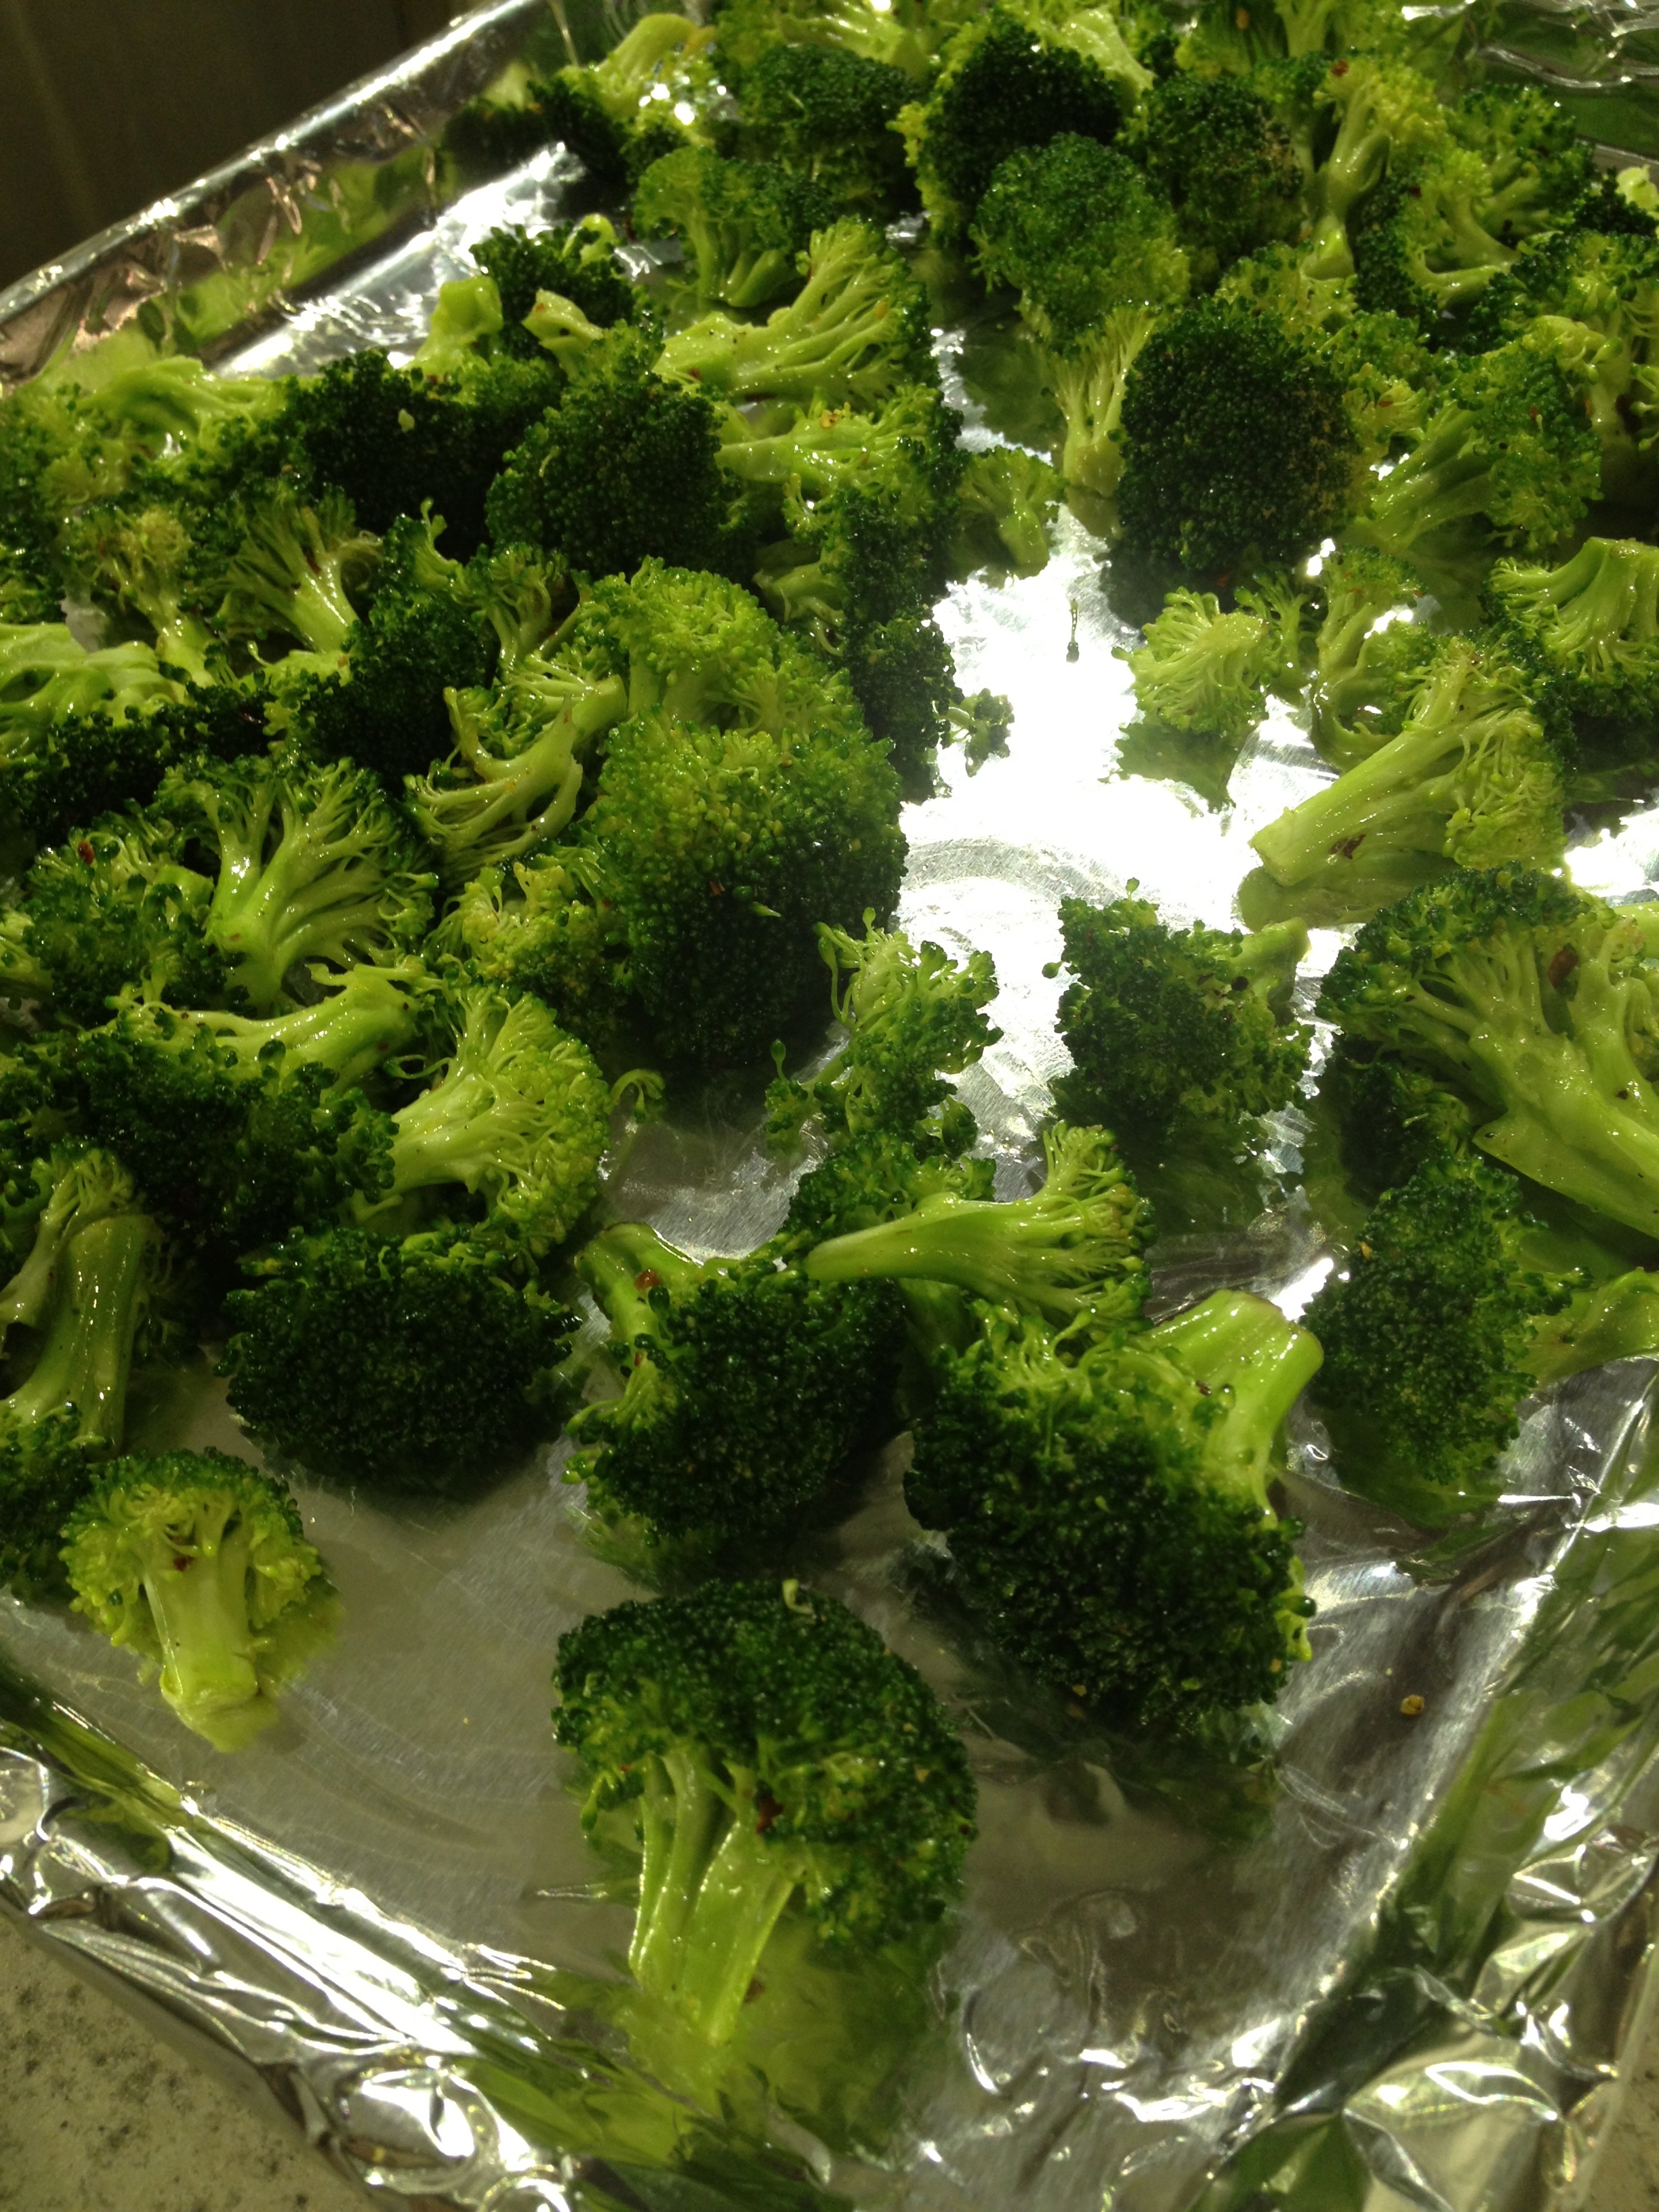 Broccoli before roasting